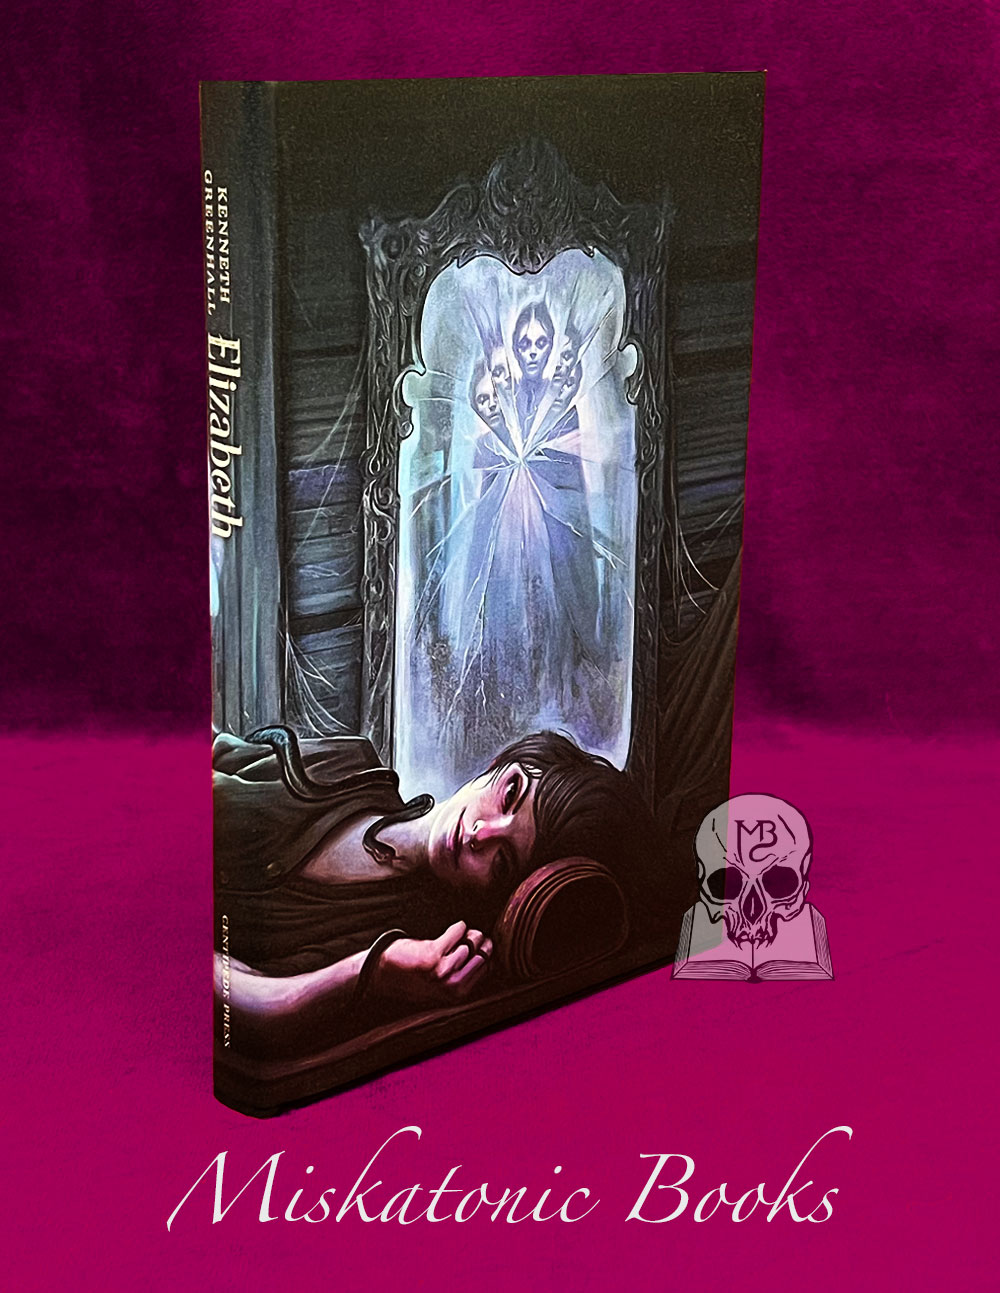 ELIZABETH by Ken Greenhall - Hardcover Edition